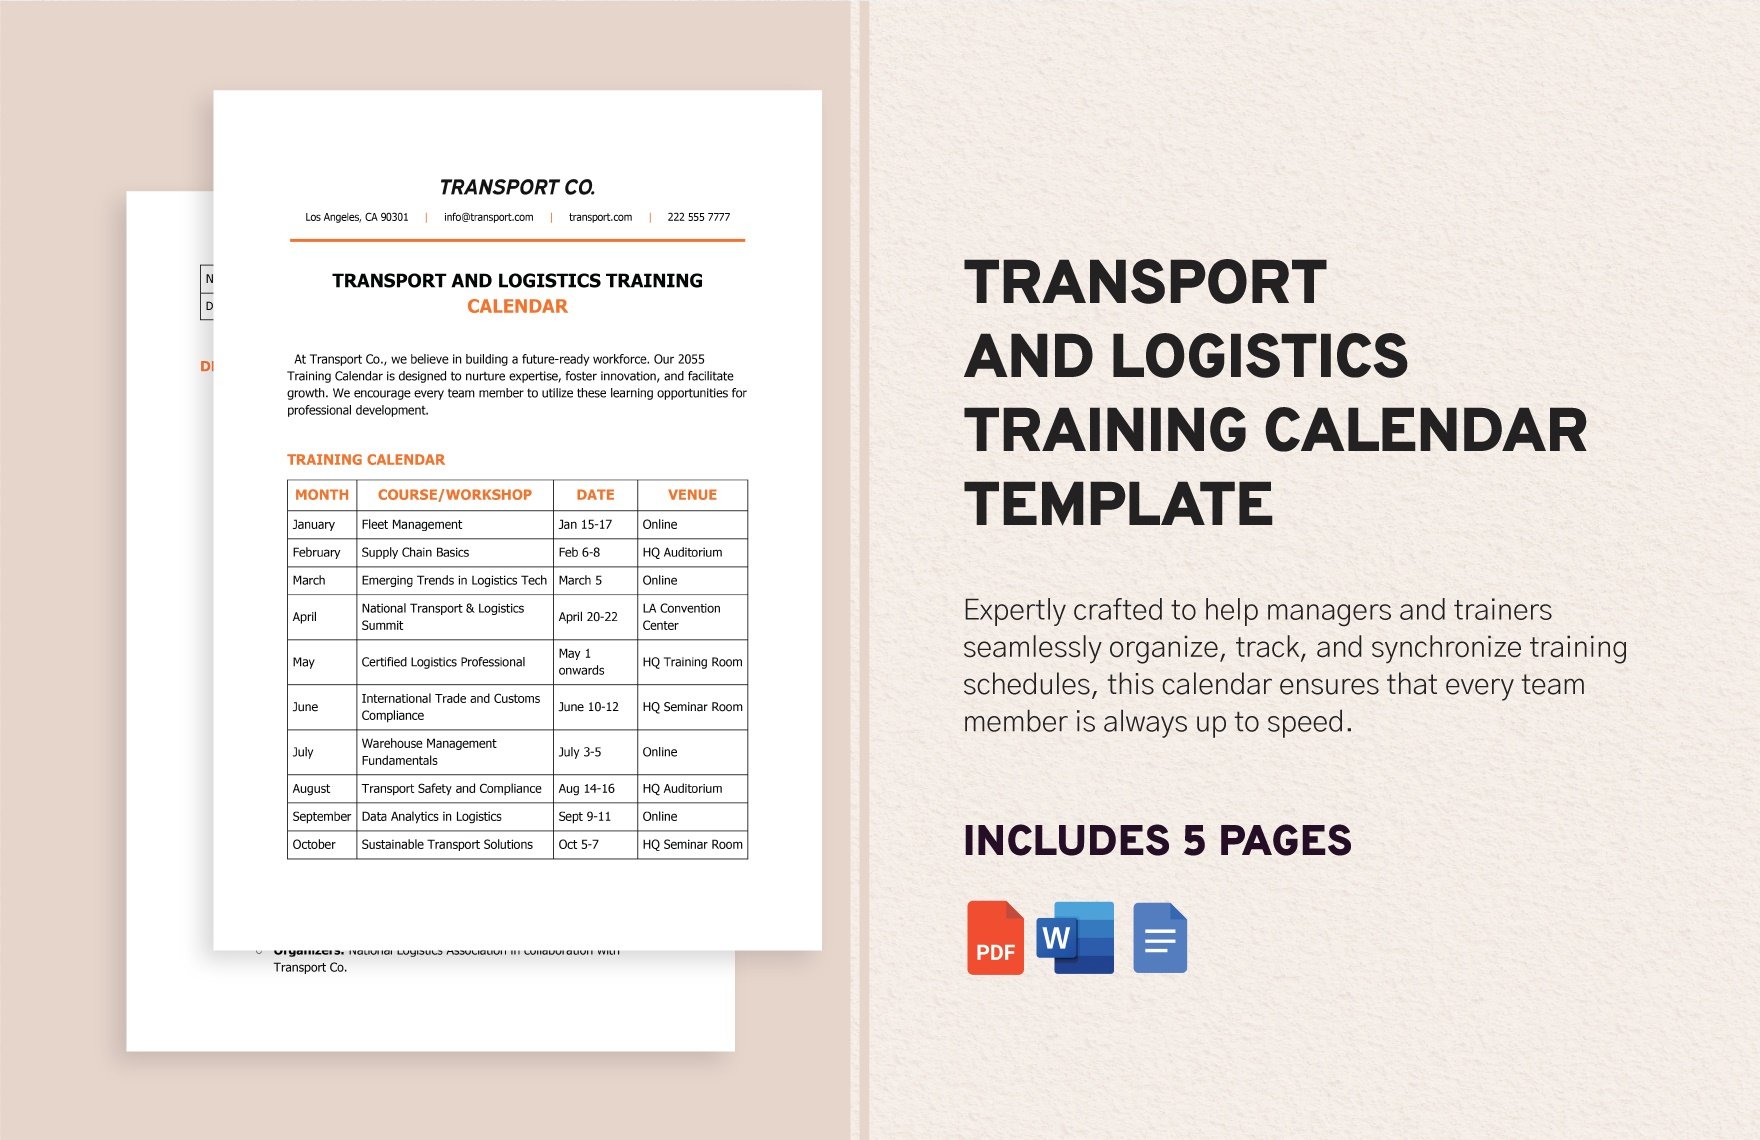 Transport and Logistics Training Calendar Template